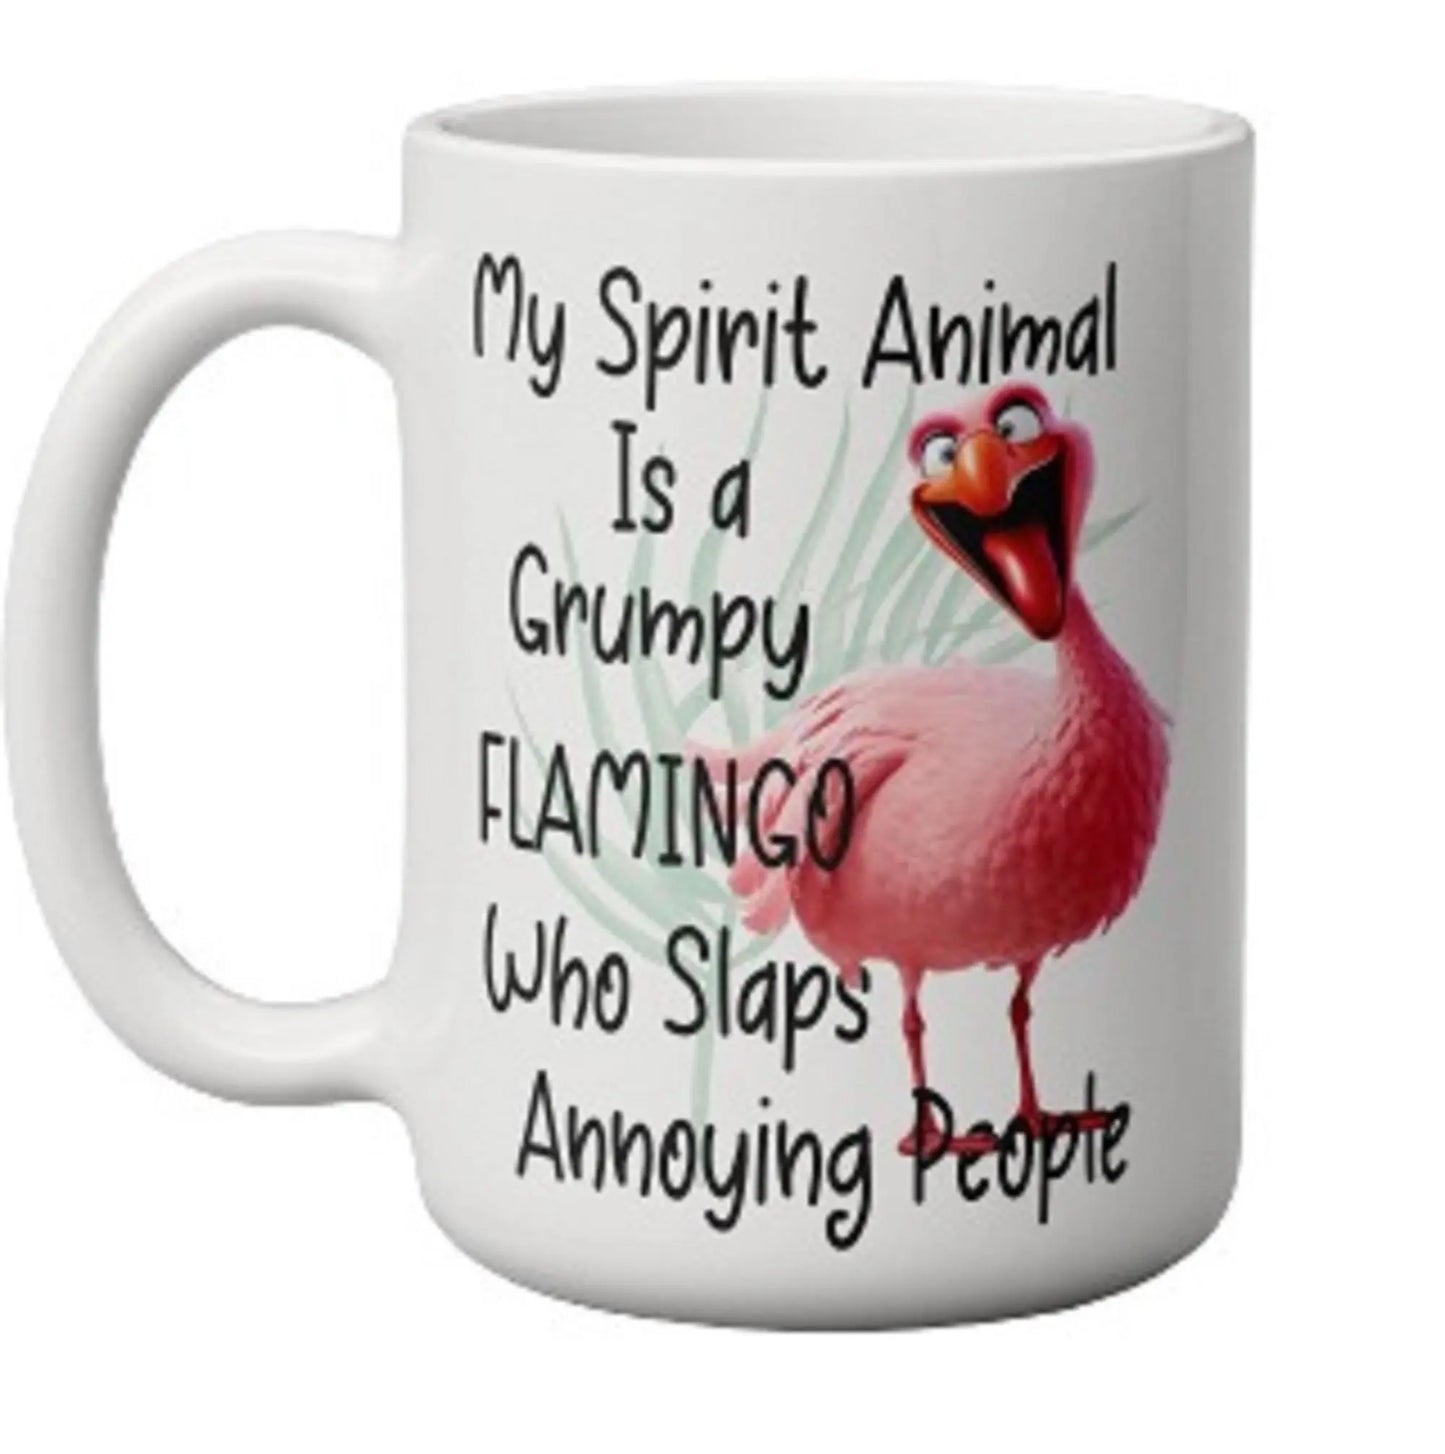  Funny Grumpy Flamingo Coffee Mug by Free Spirit Accessories sold by Free Spirit Accessories